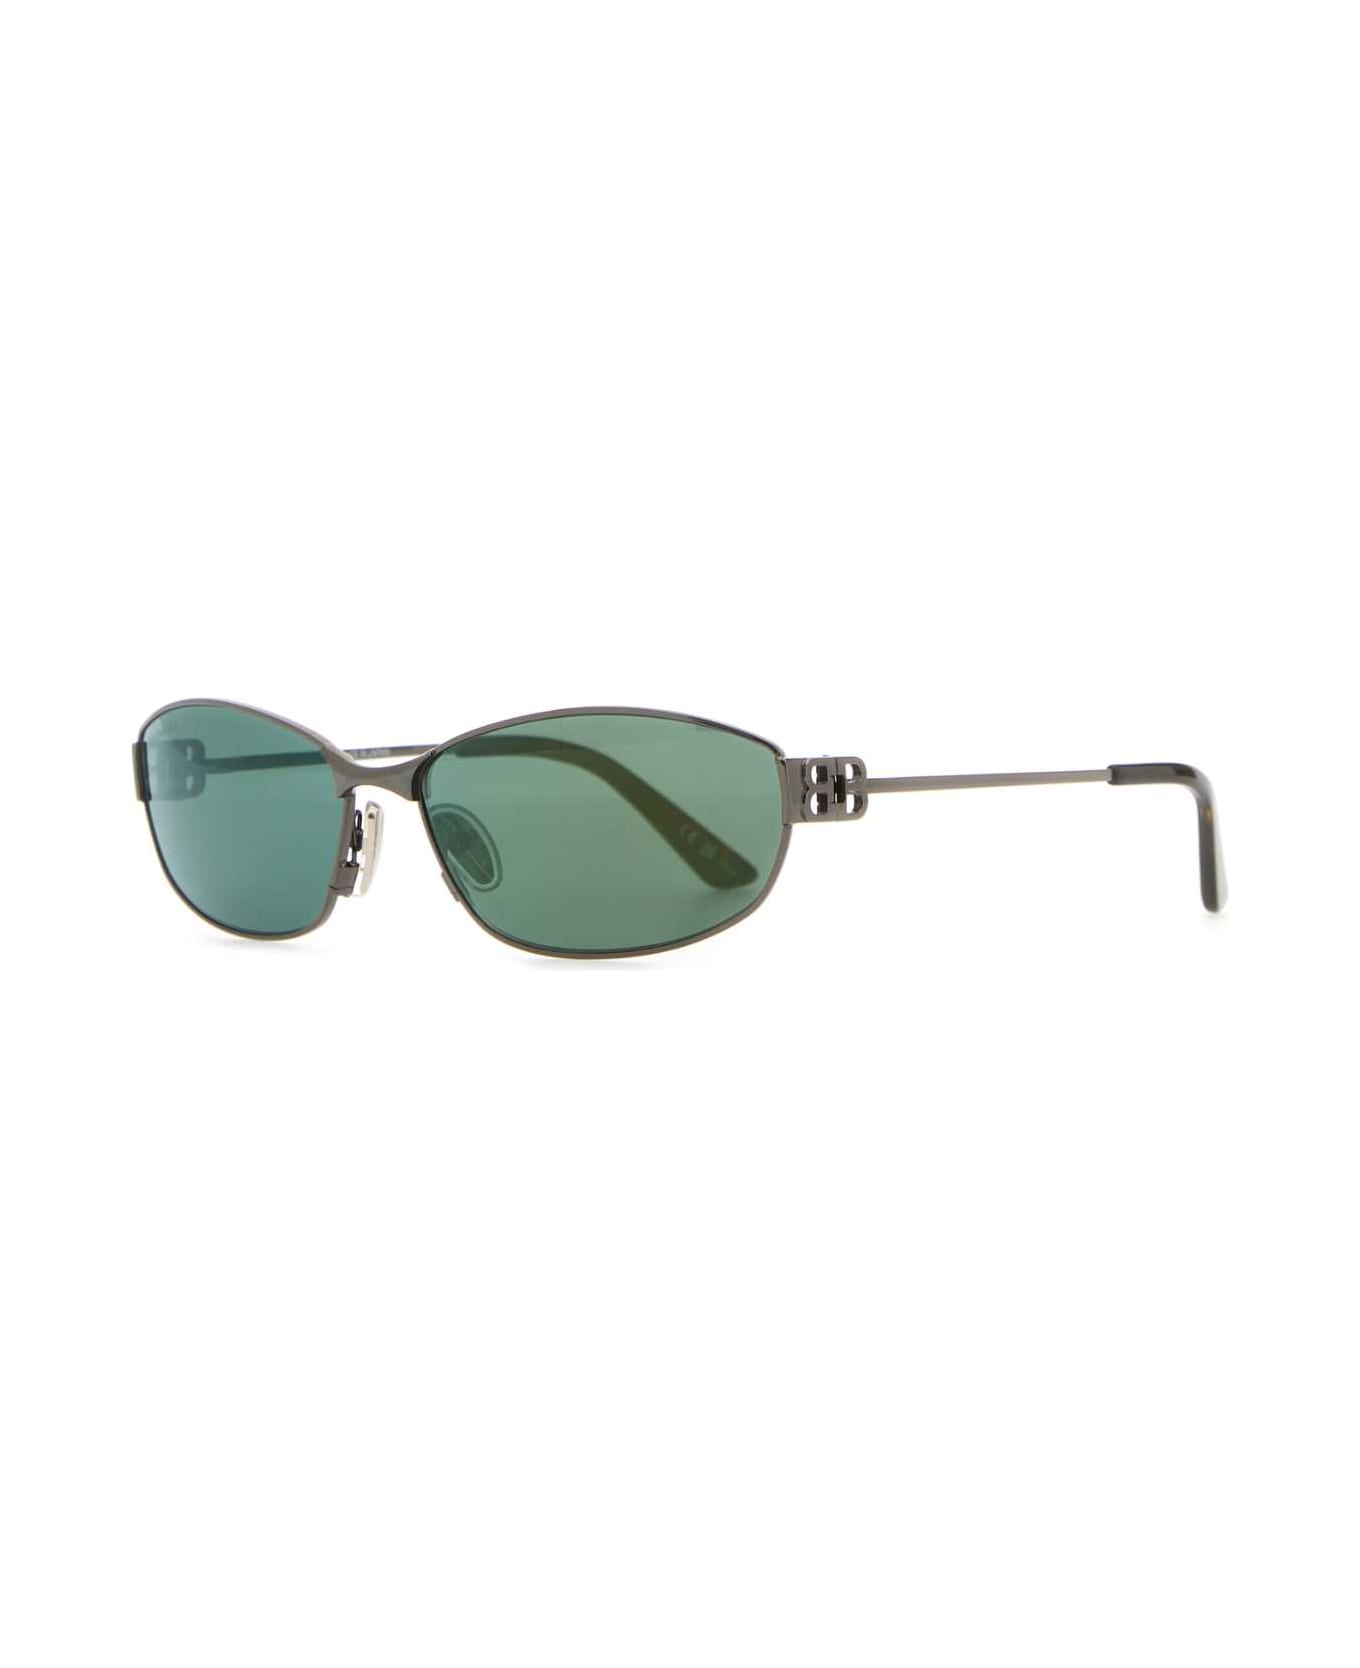 Balenciaga Silver Metal Mercury Oval Sunglasses - MIRRORPETROL